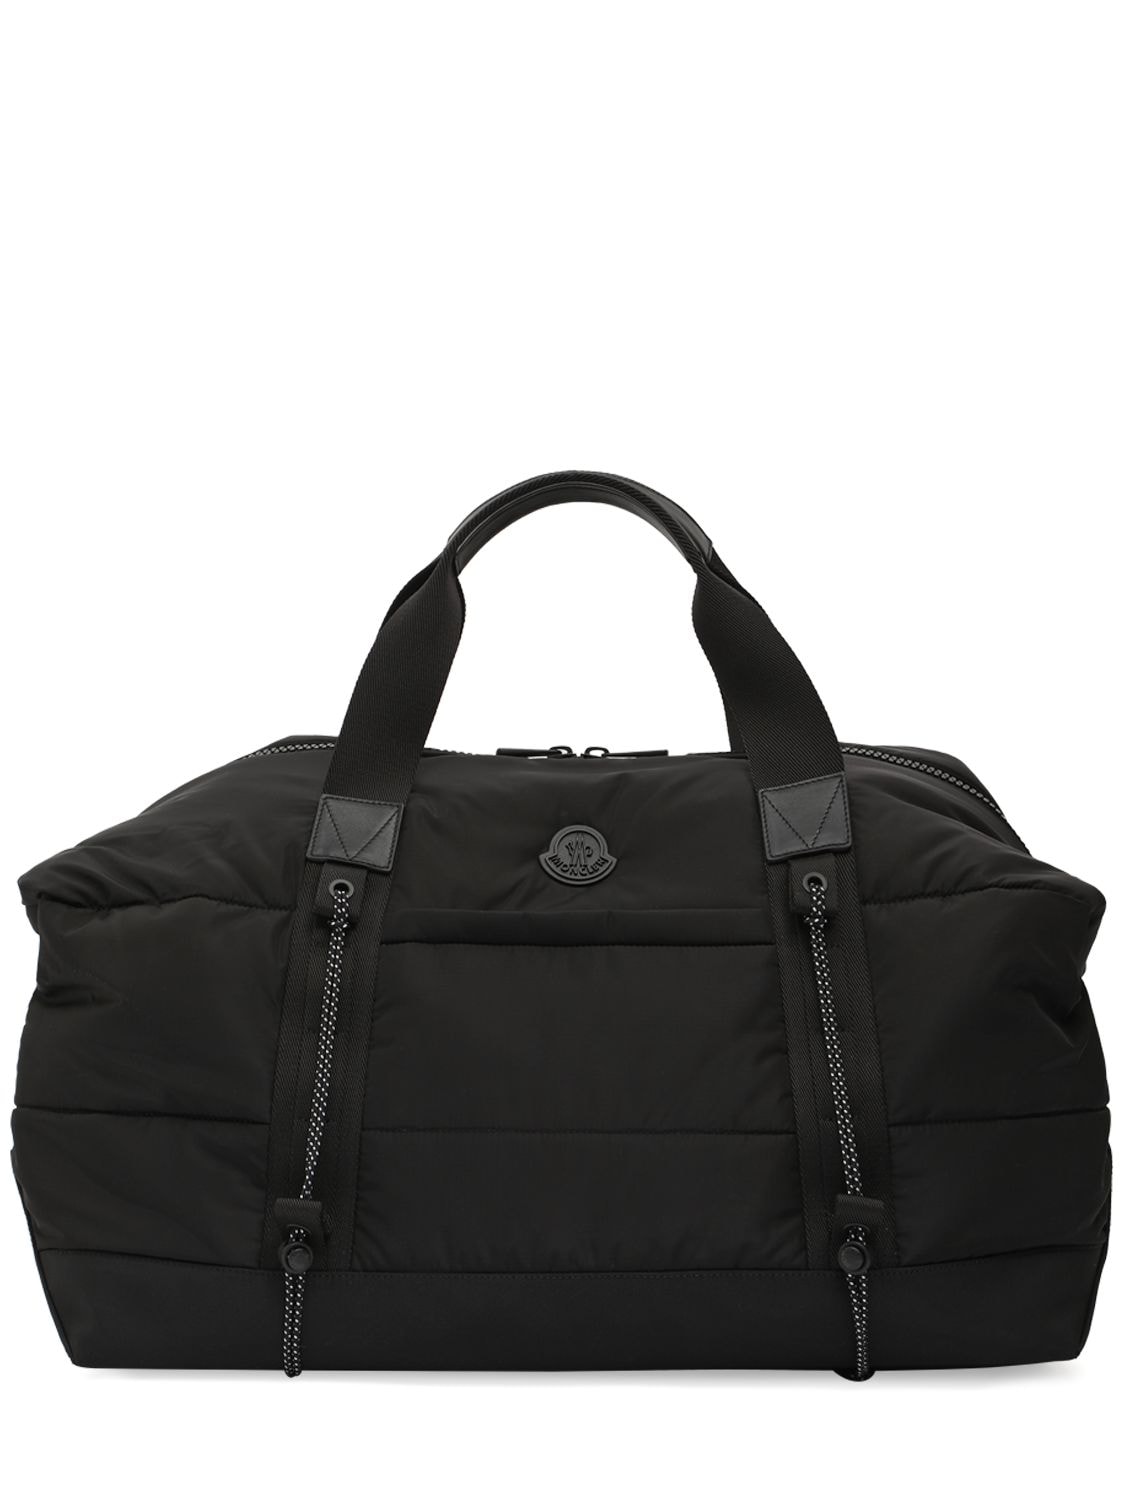 Image of Makaio Nylon Duffle Bag